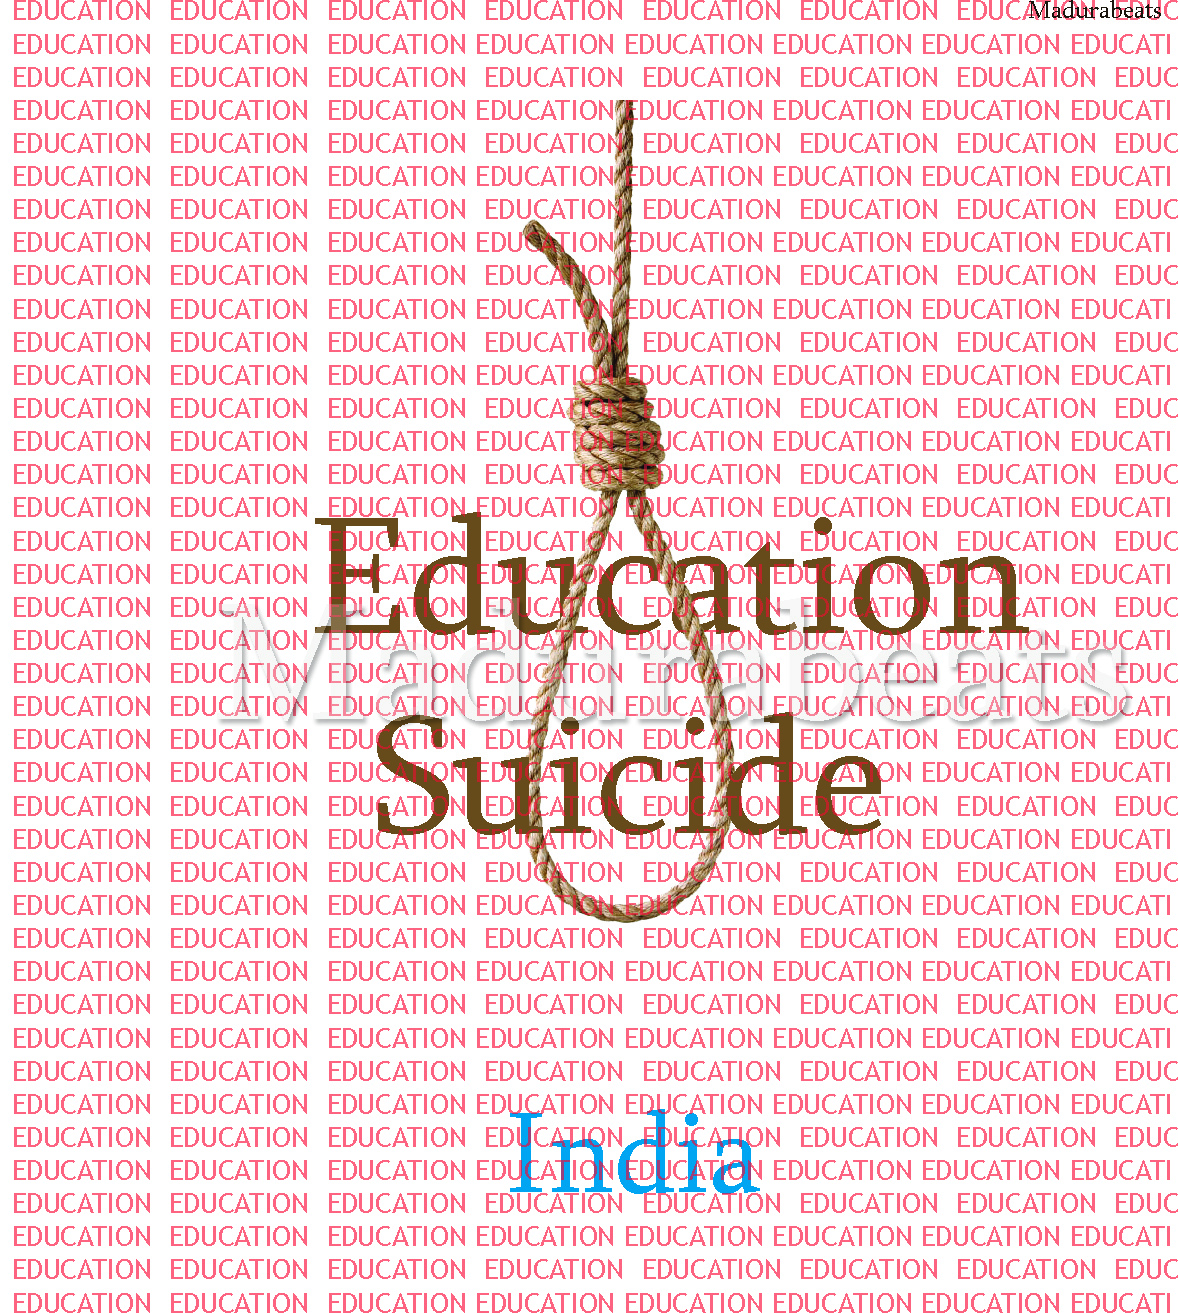 indian education suicide 1